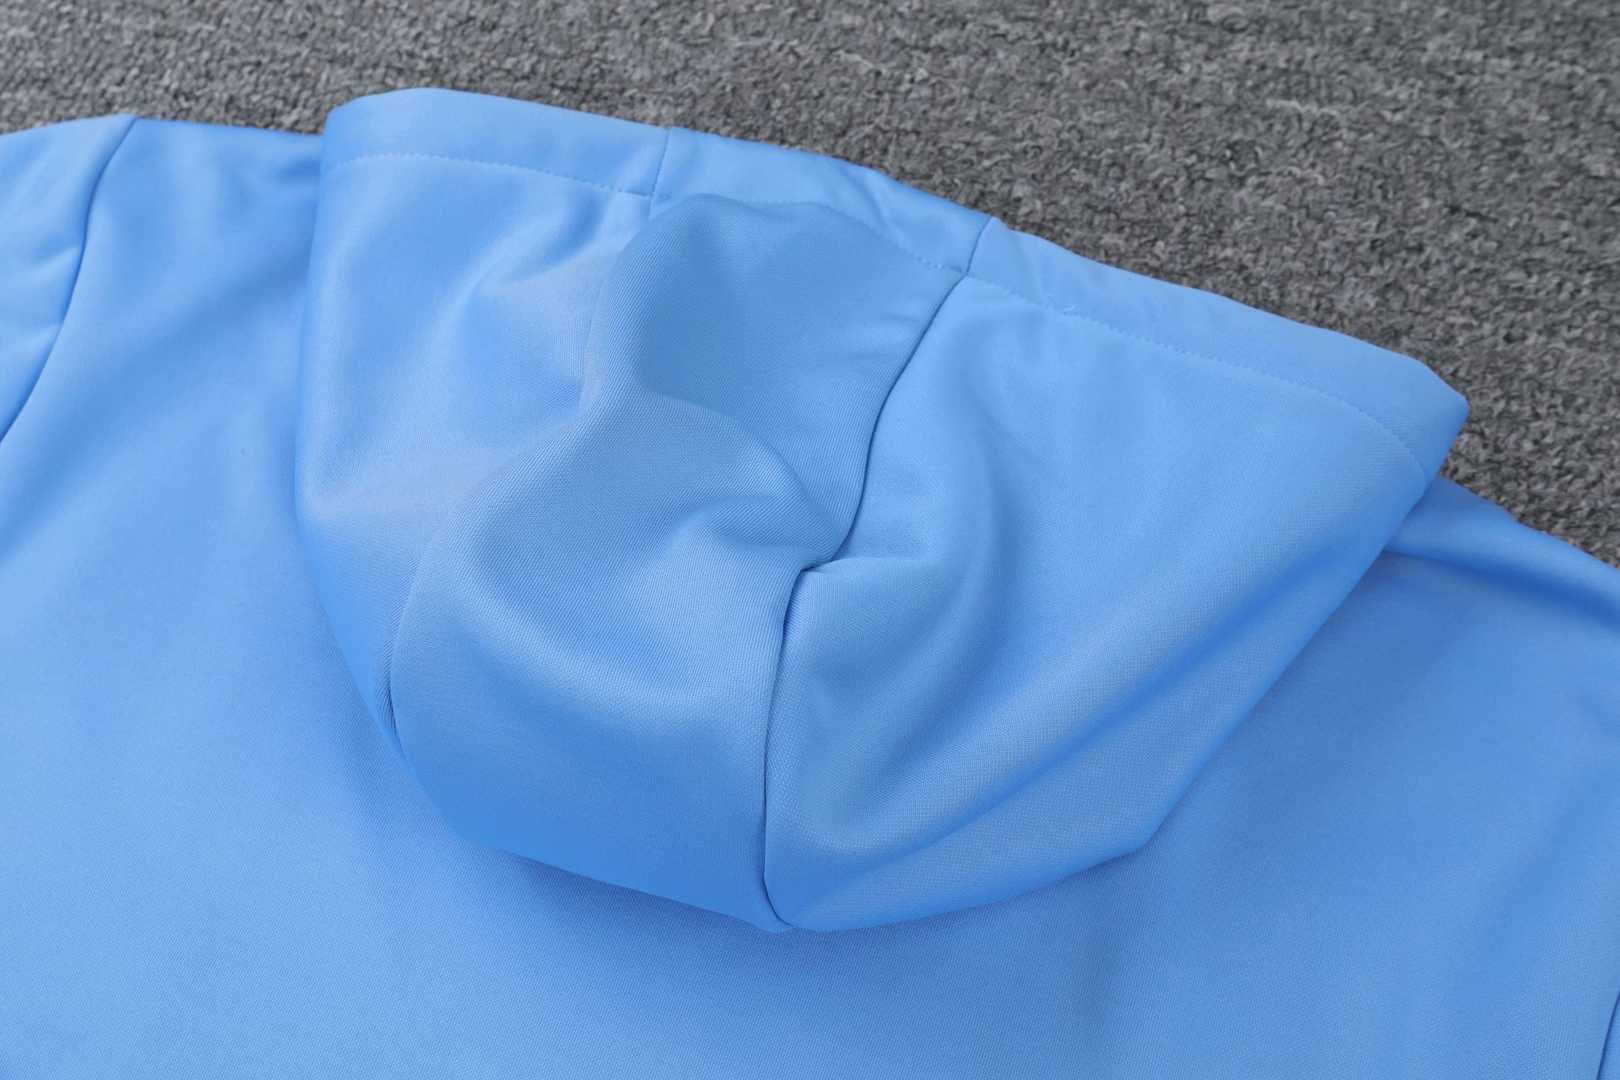 2019/20 Manchester City Hoodie Blue Mens Soccer Training Suit(SweatJersey + Pants)